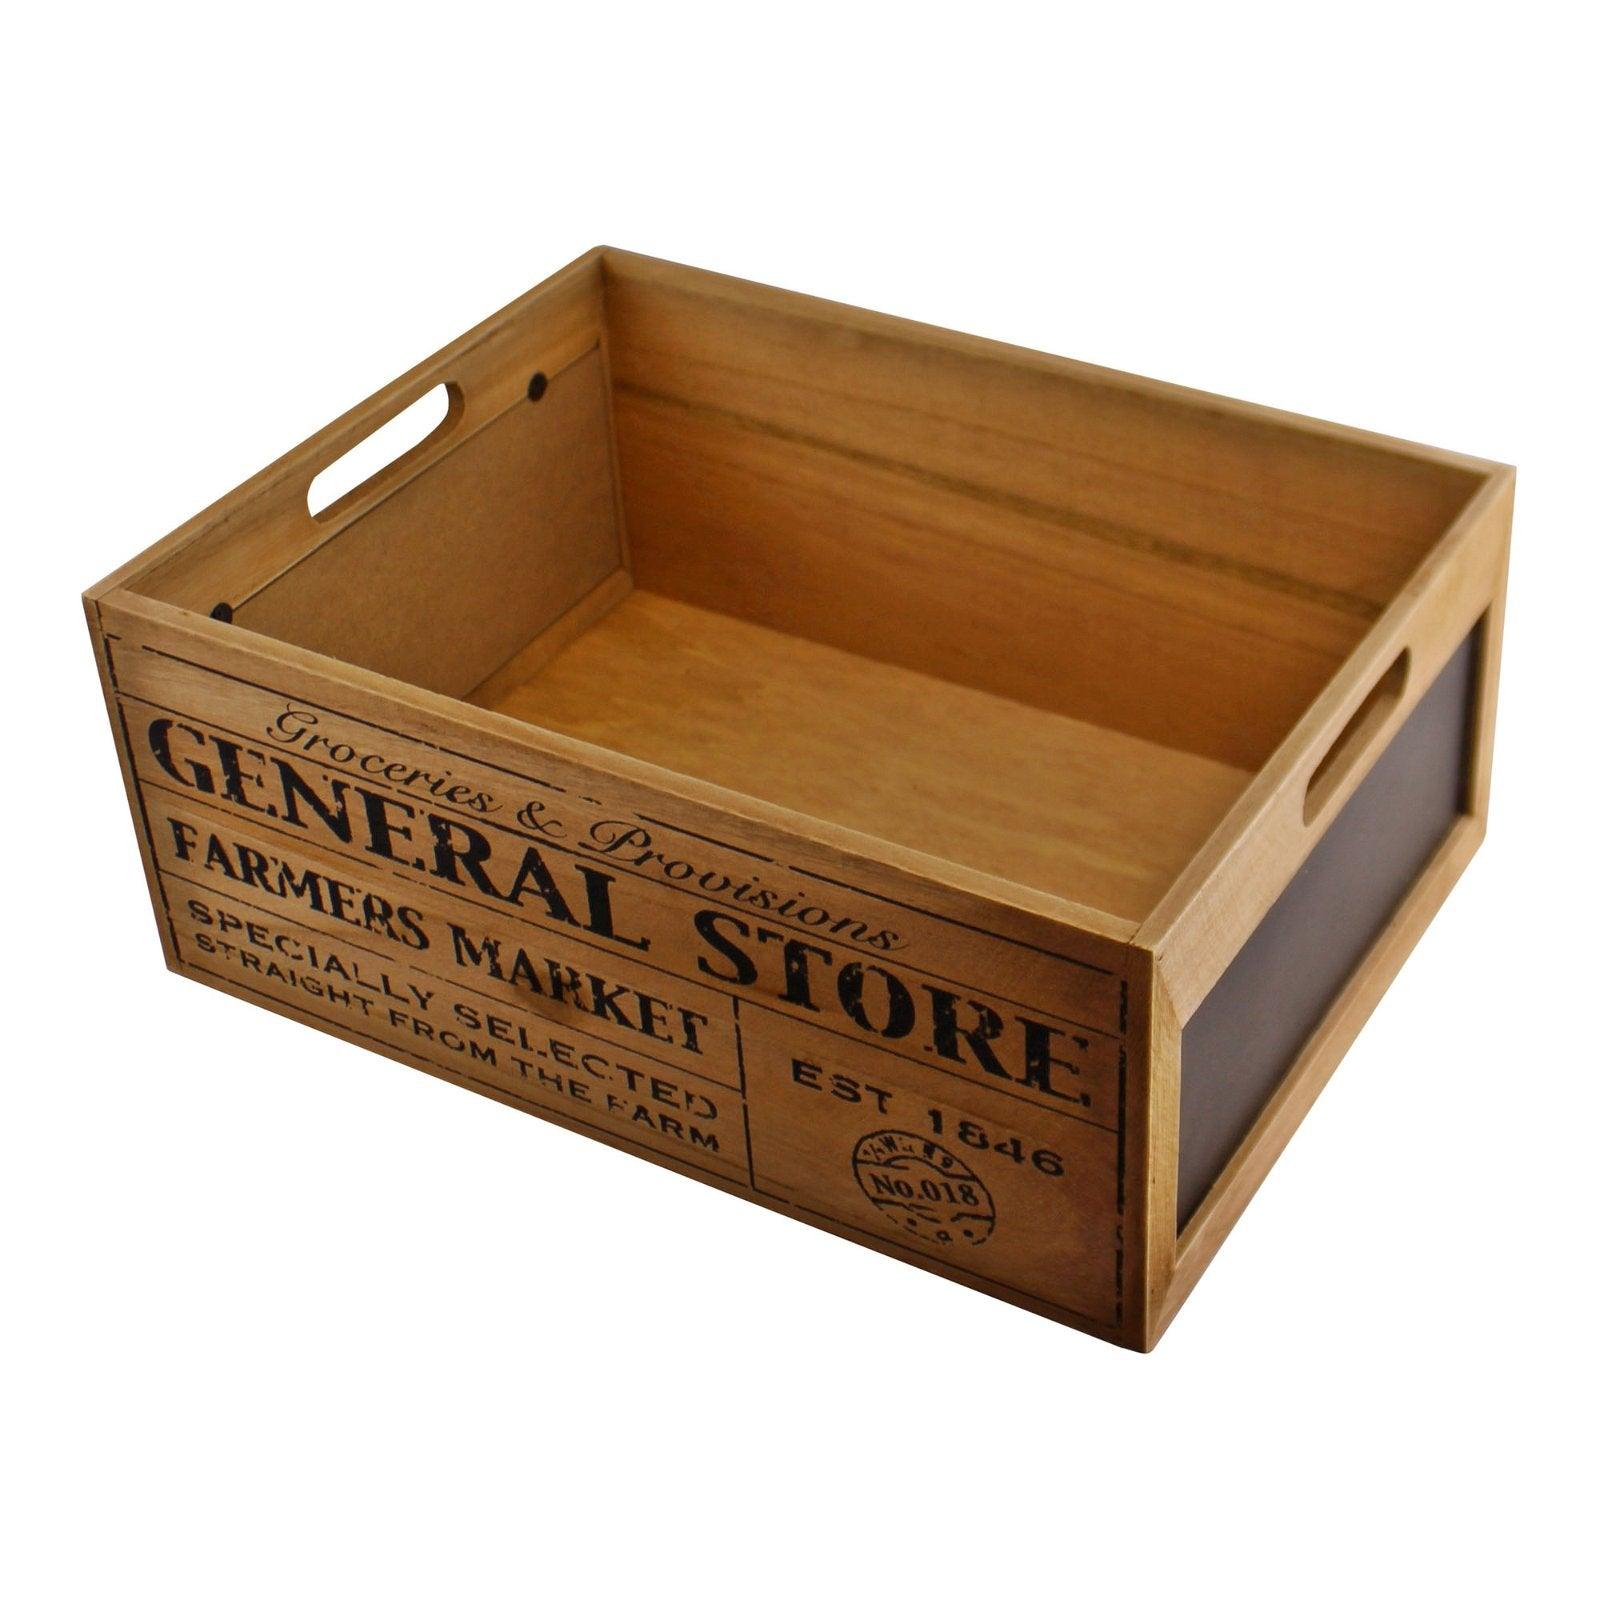 Set Of 3 General Store Chalkboard Storage Crates - £83.99 - Storage Baskets 